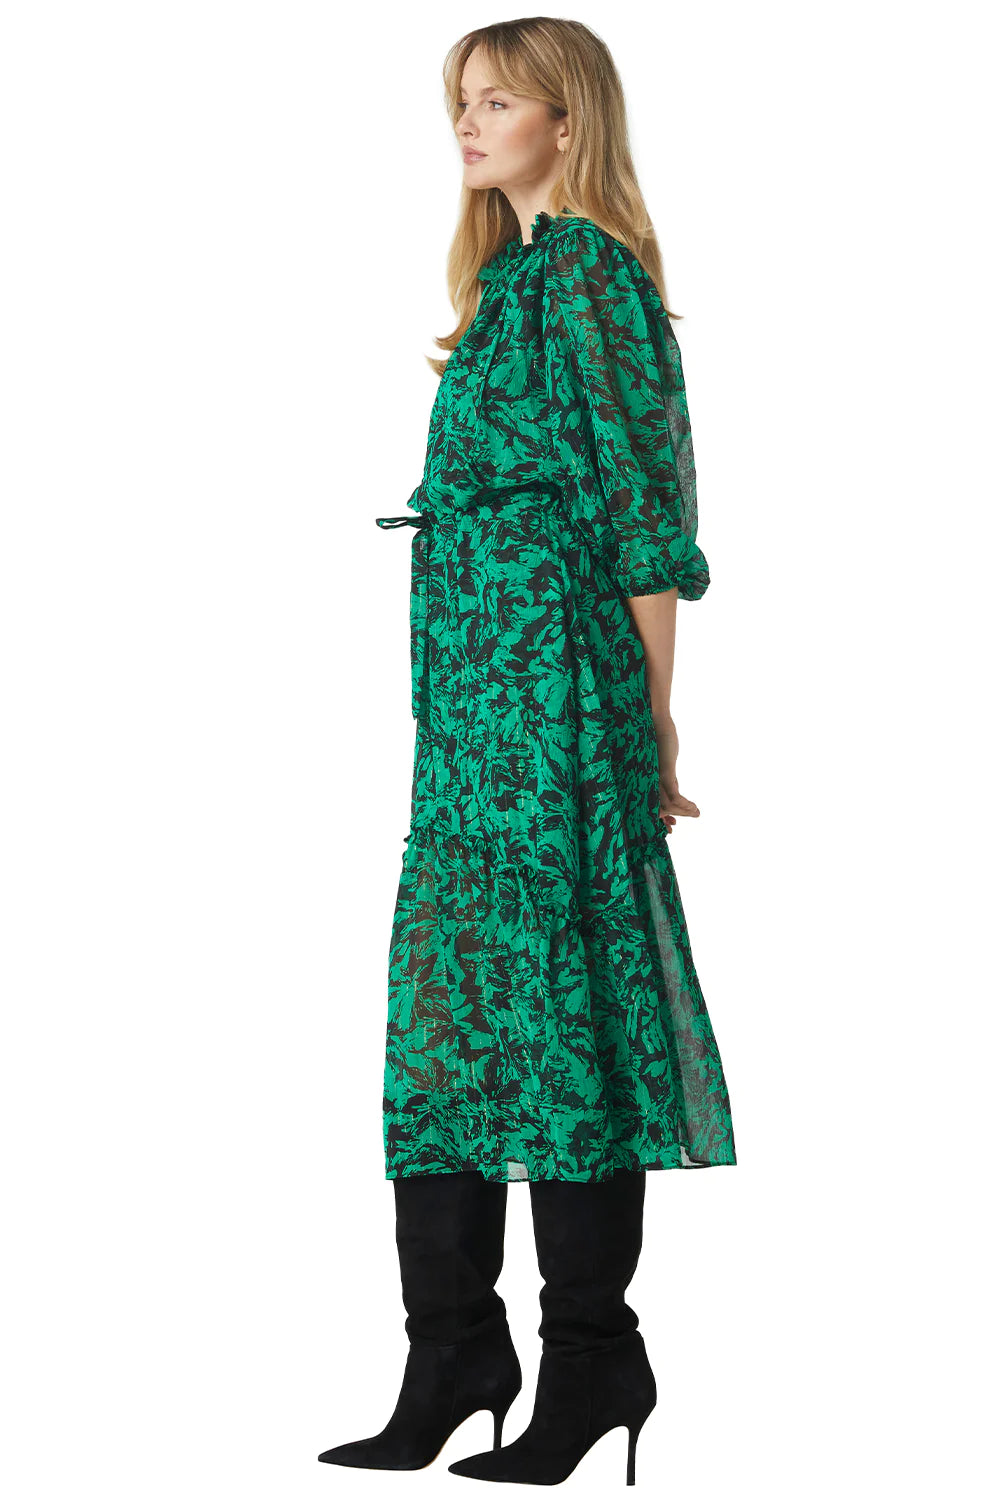 Olivia Dress - Emerald Abstract